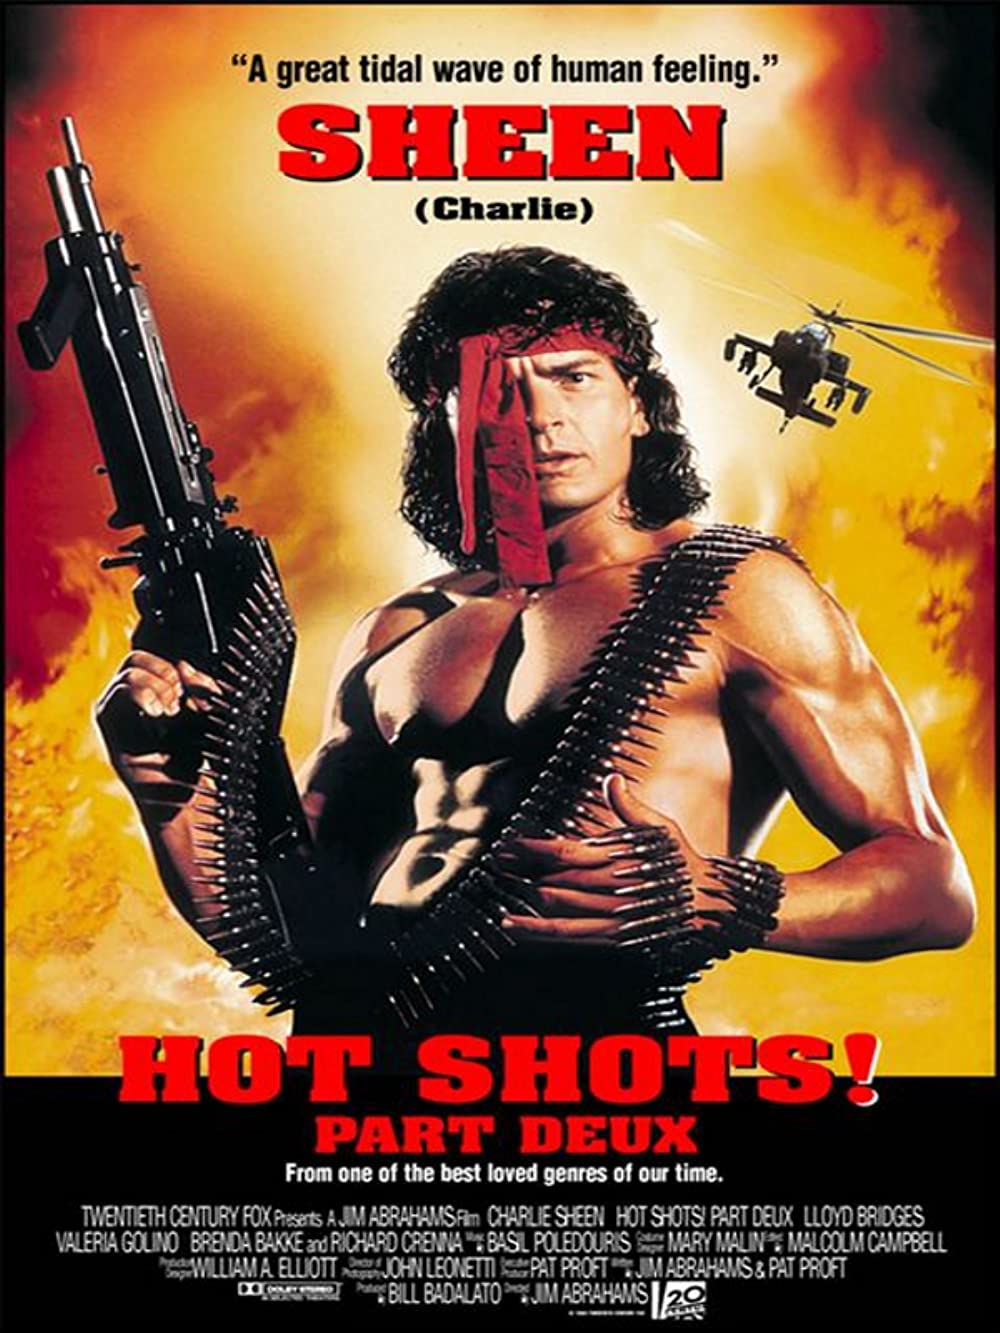 Filmbeschreibung zu Hot Shots! Der 2. Versuch